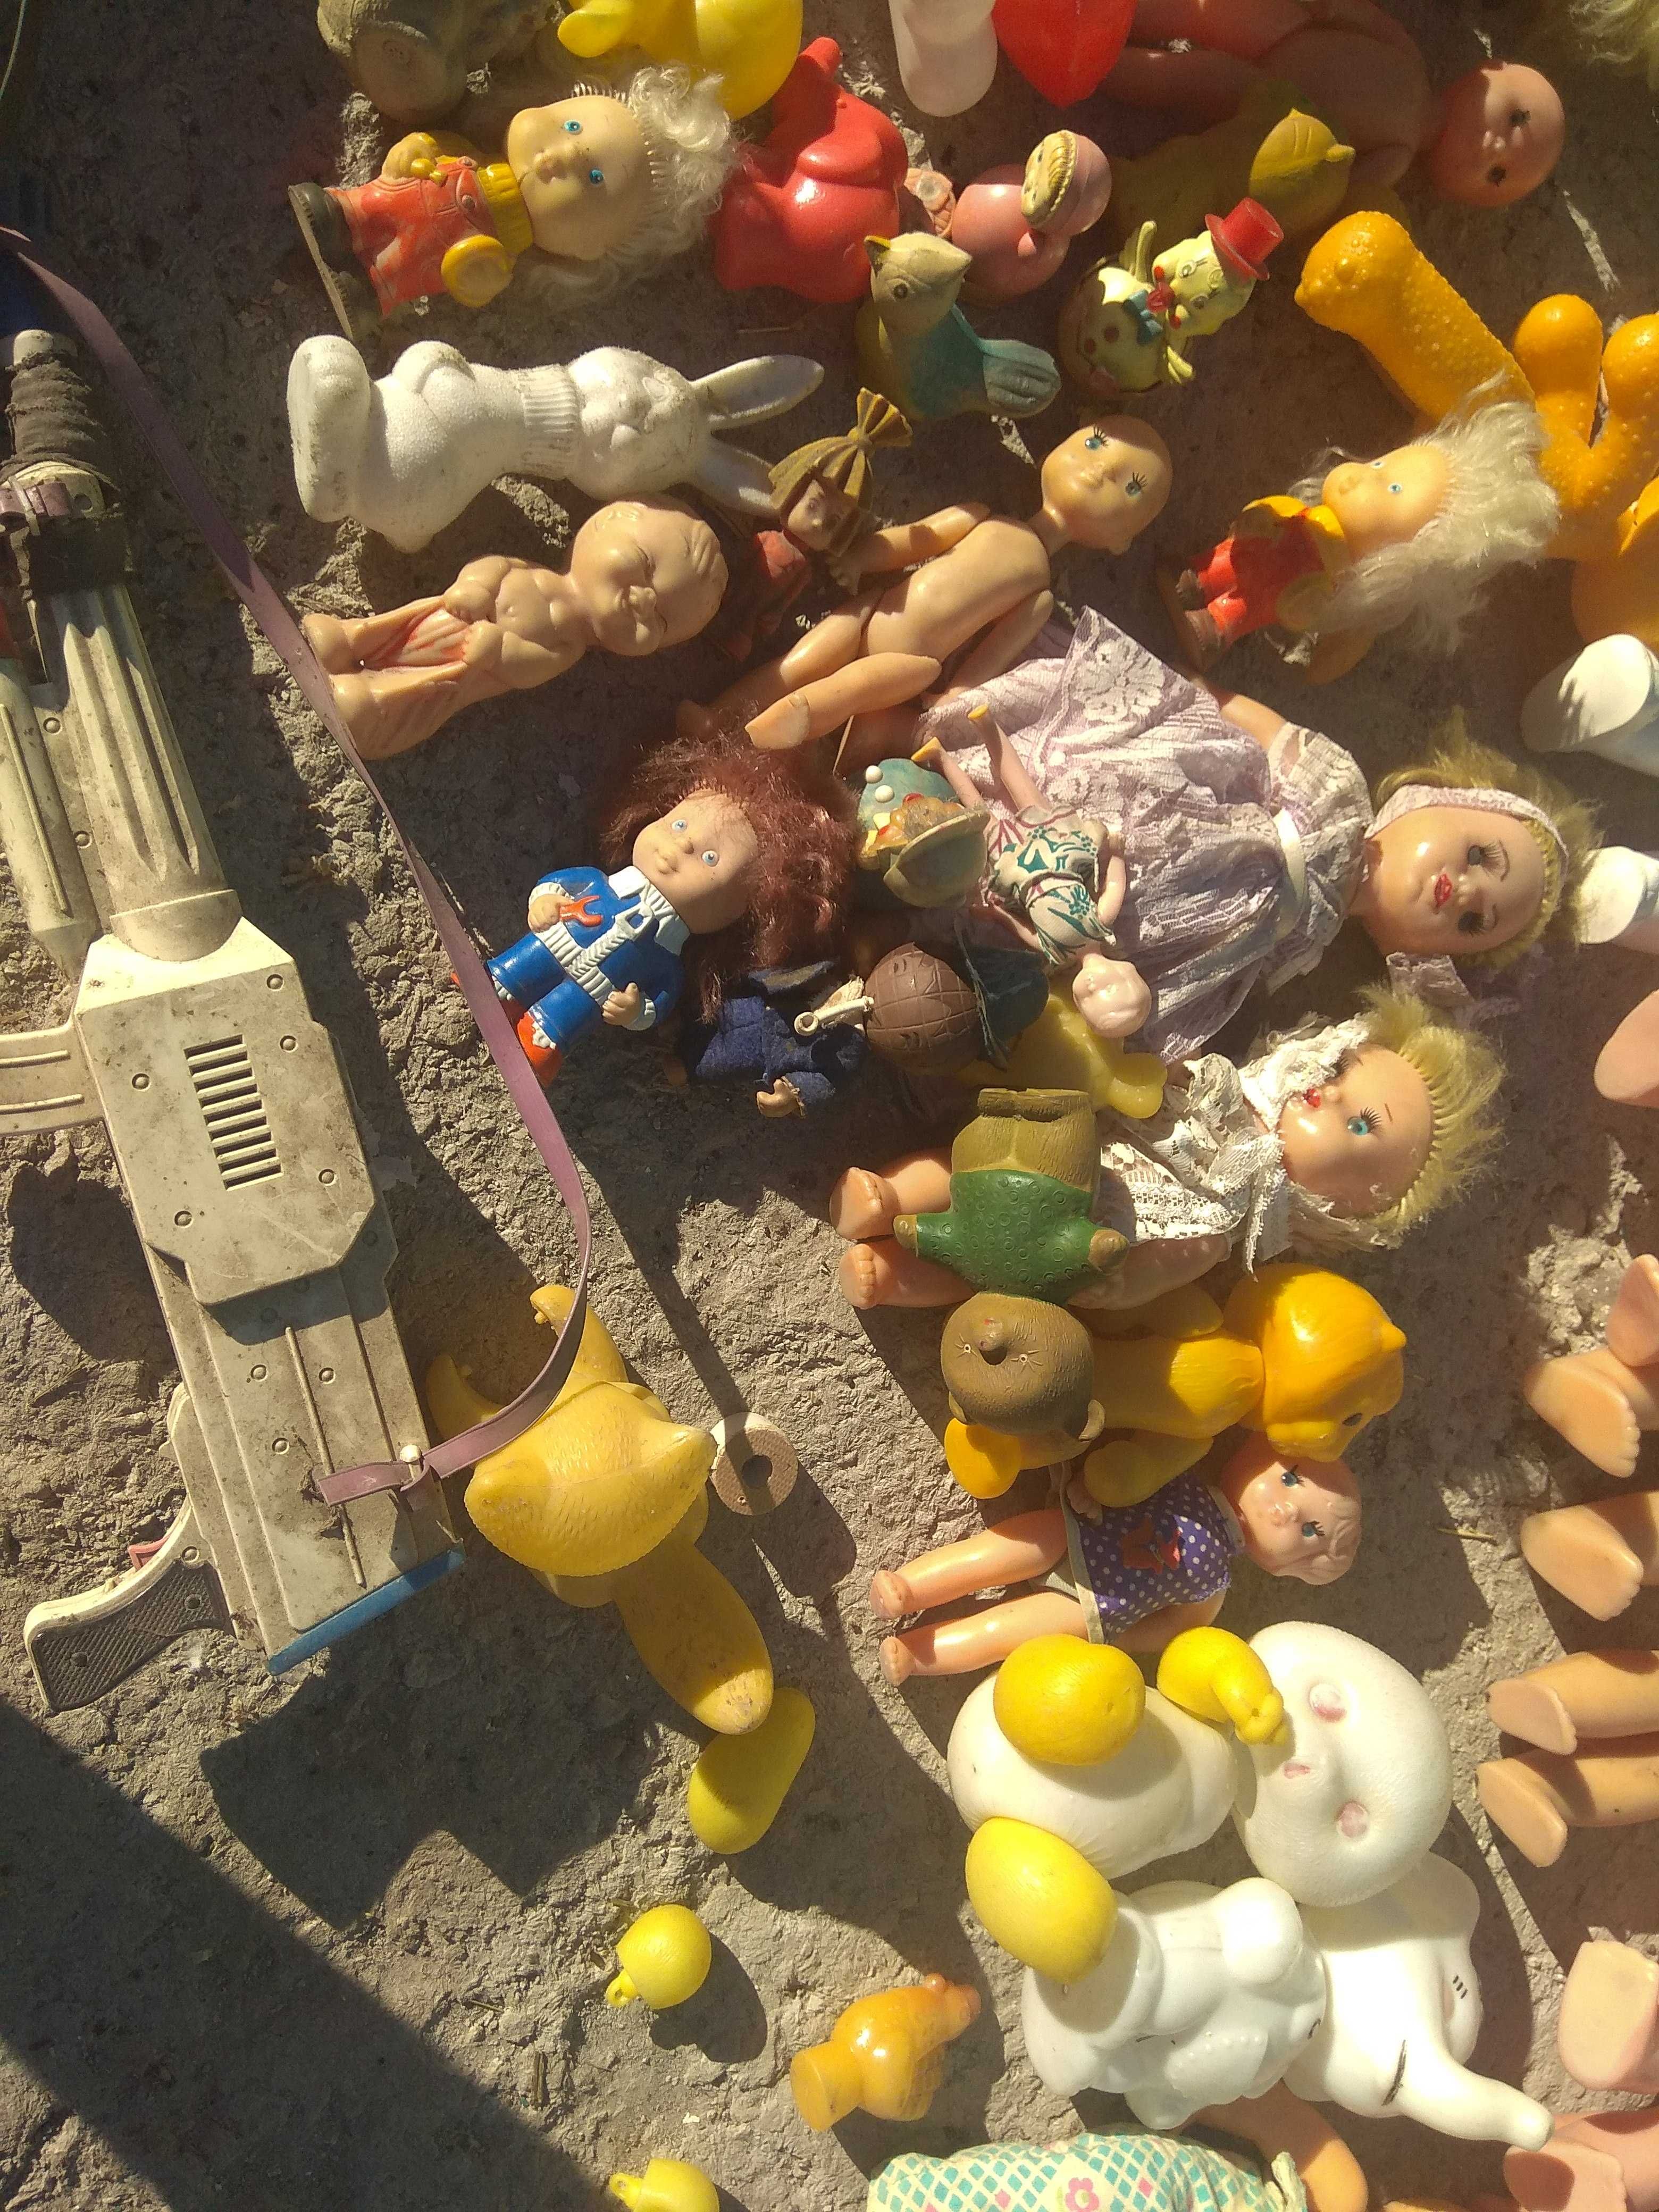 Куклы СССР (игрушки) ляльки машина  юла